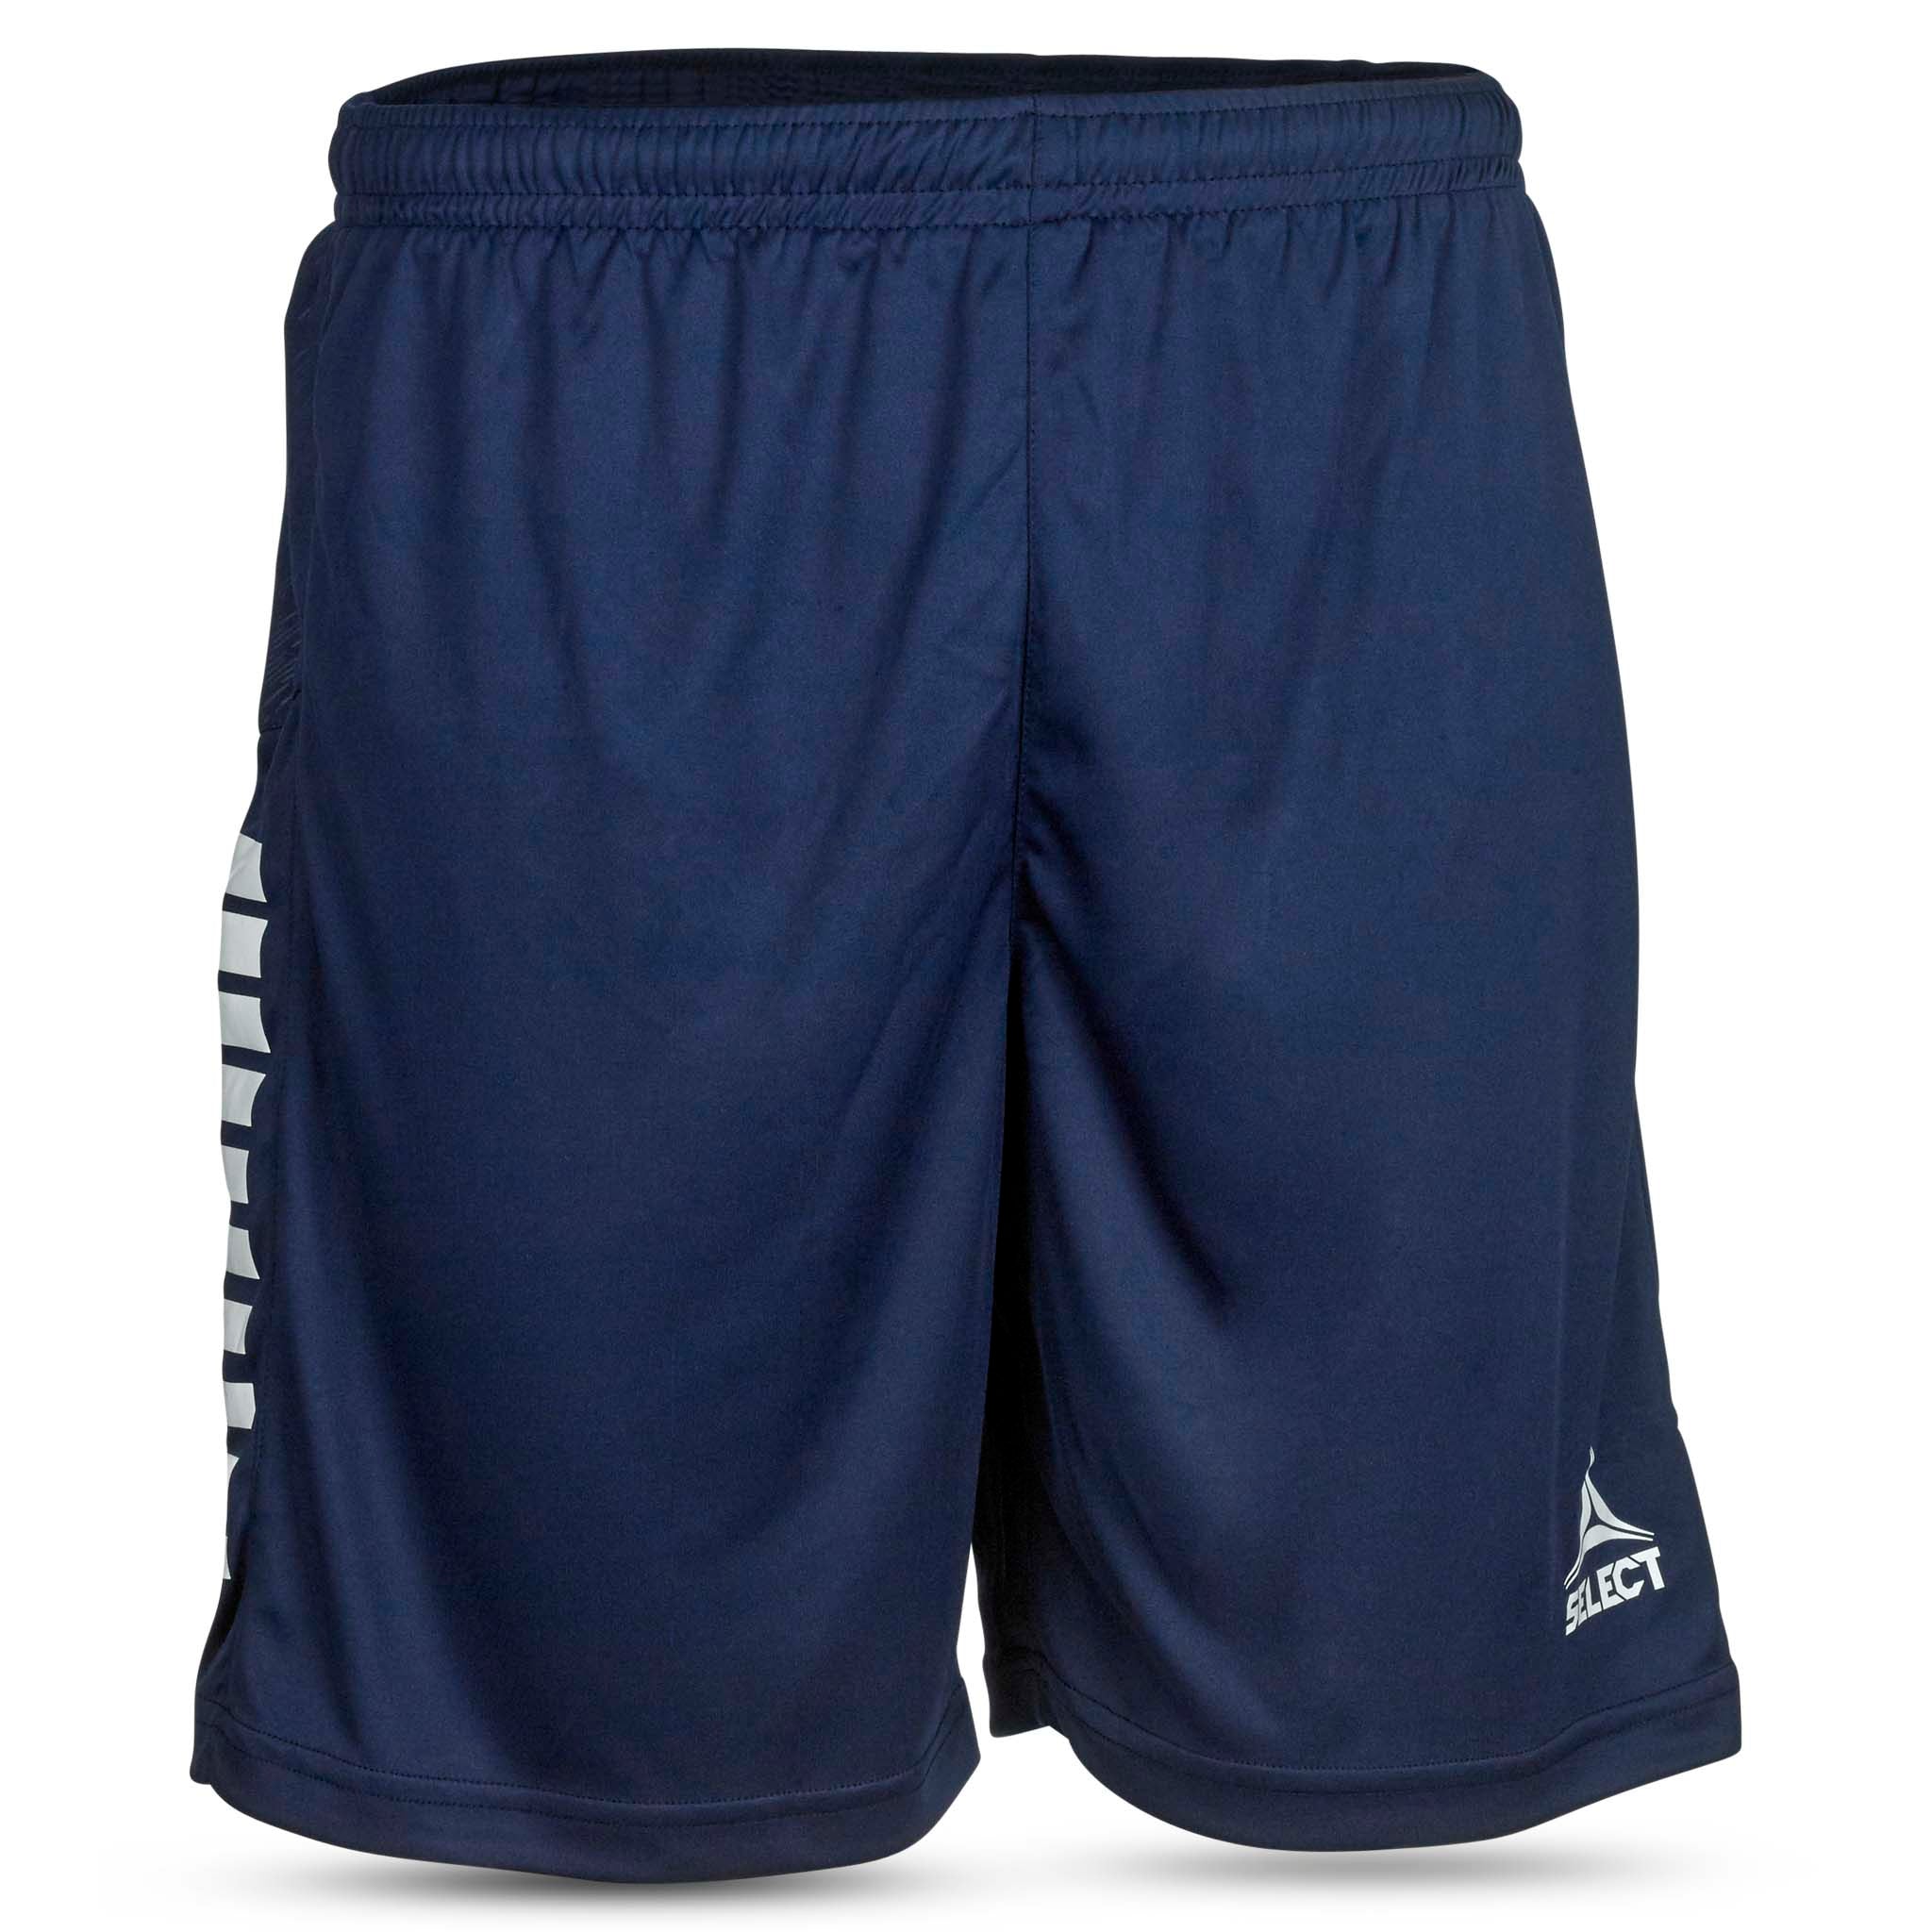 Spain Shorts - Barn #farge_navy